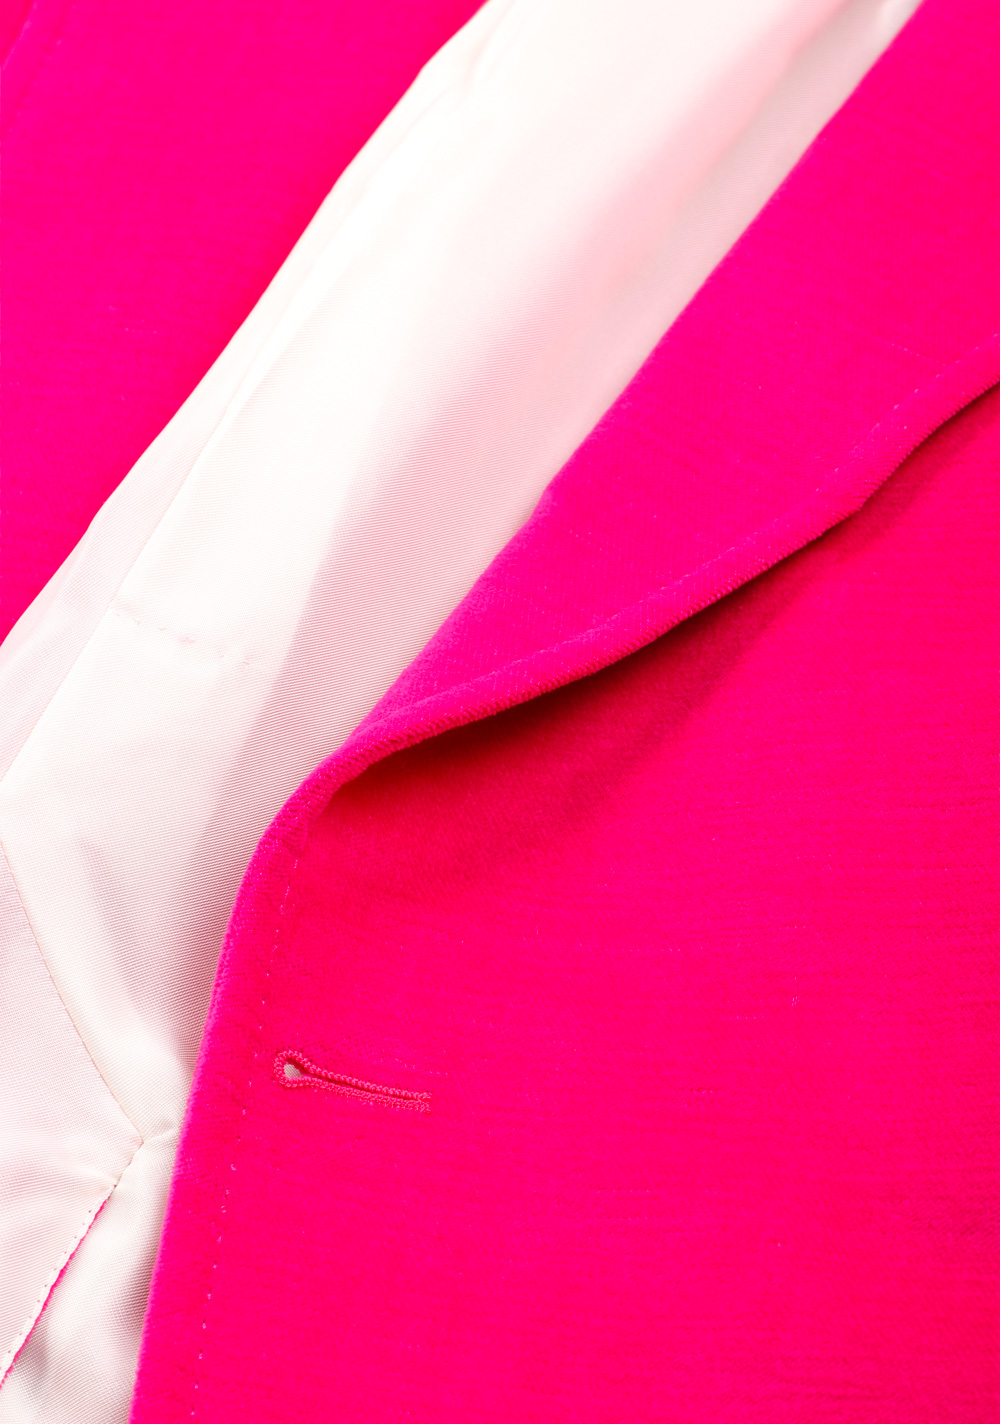 TOM FORD Shelton Velvet Pink Sport Coat Size 54 / 44R U.S. In Cotton Linen | Costume Limité